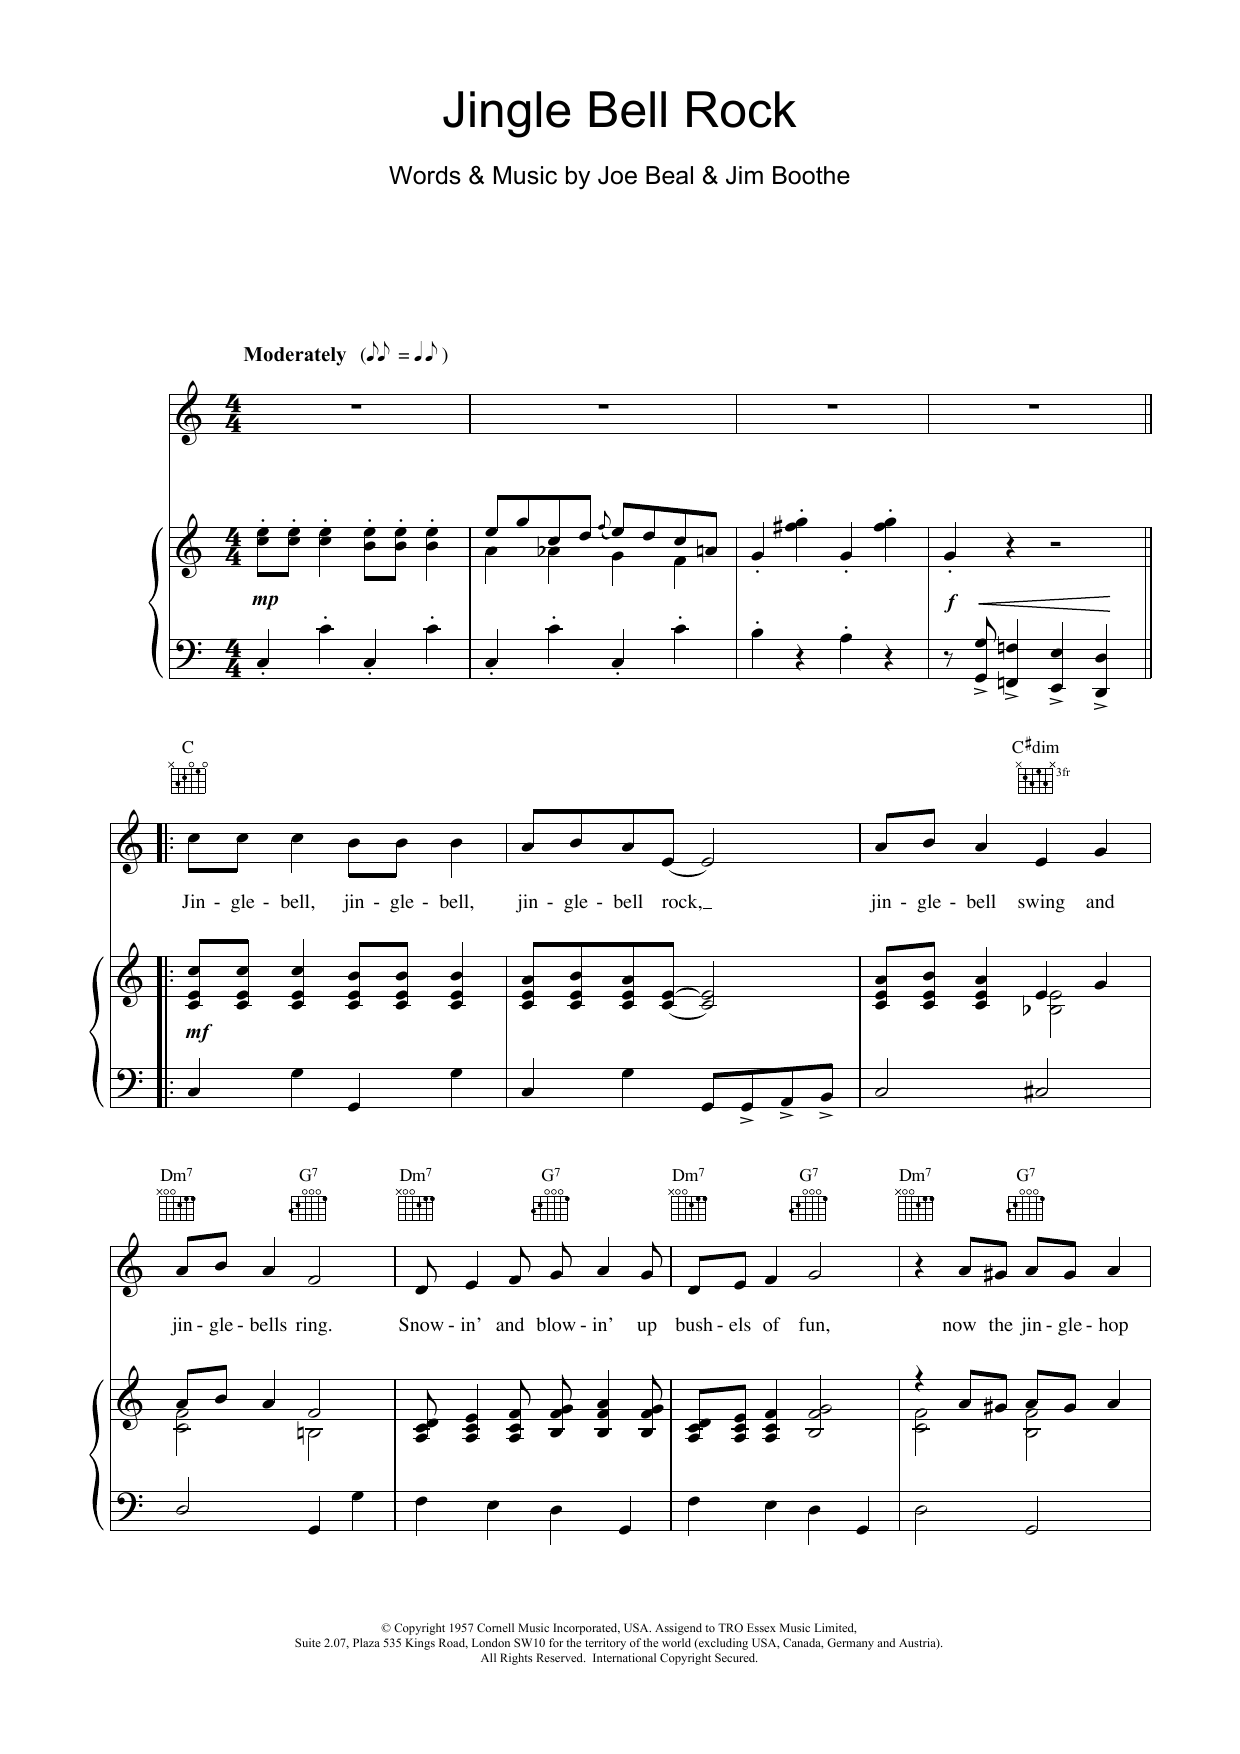 Max Bygraves Jingle Bell Rock sheet music notes printable PDF score